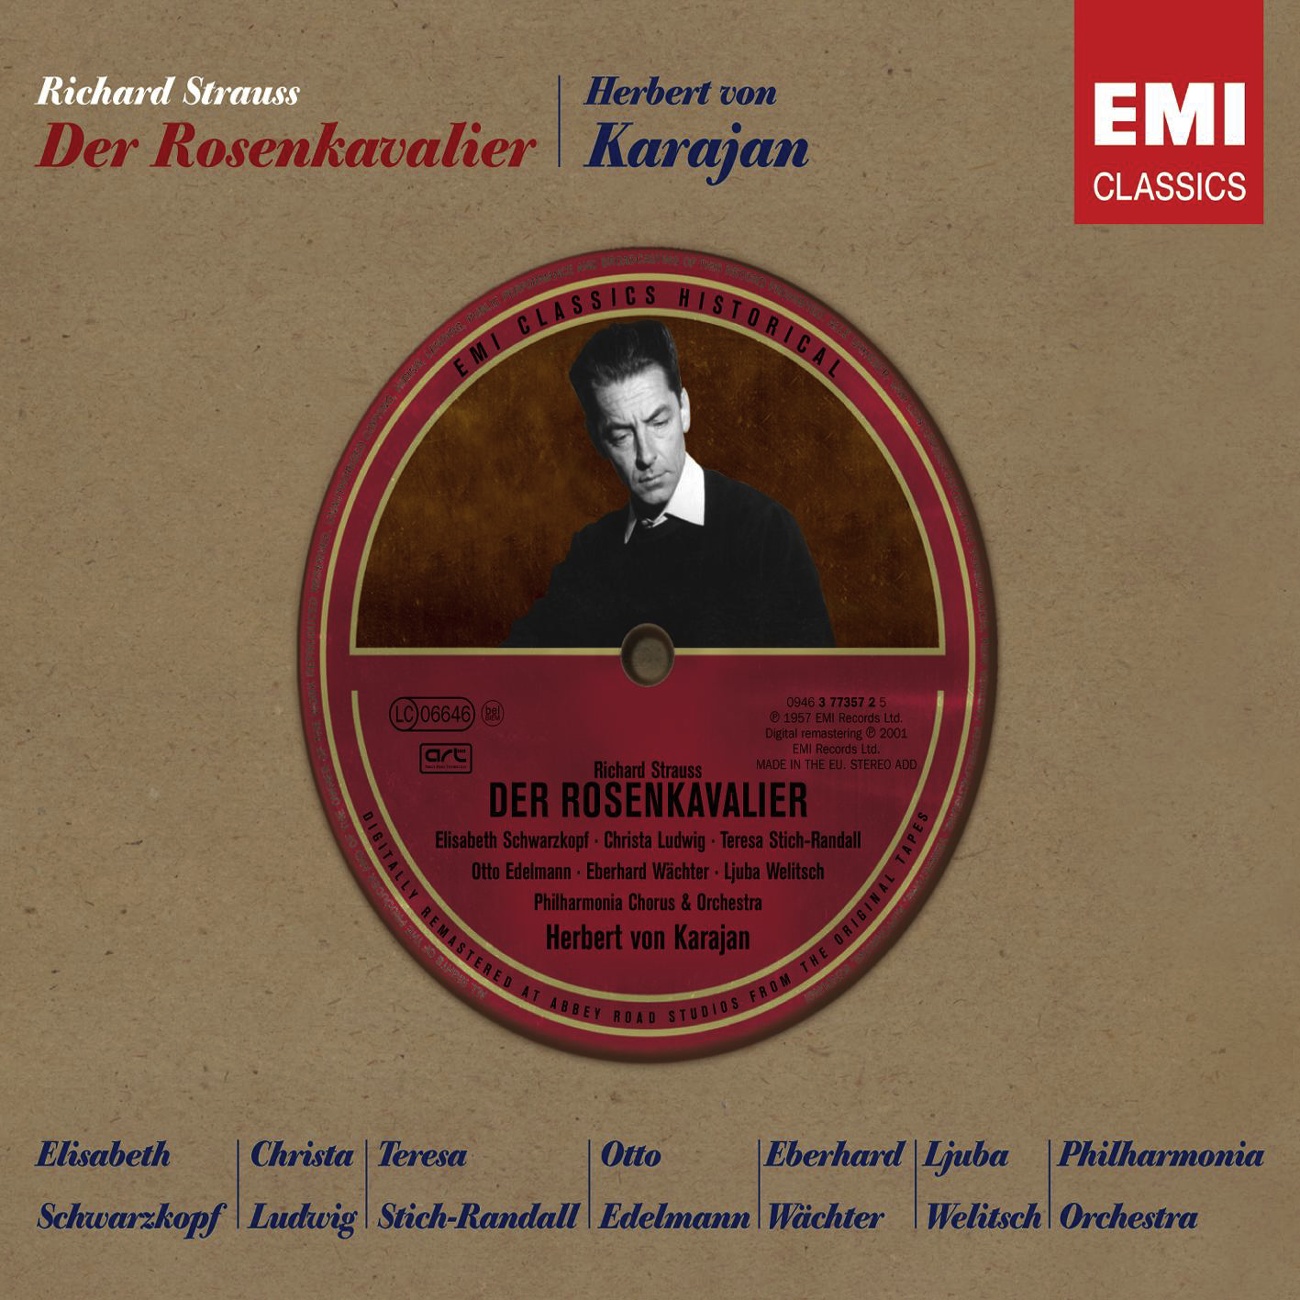 Der Rosenkavalier (2001 Digital Remaster), Act III: Leupold, wir geh'n (Ochs/Annina/Kinder/Kellner/Wirt/Valzacchi/Musikanten/Kut